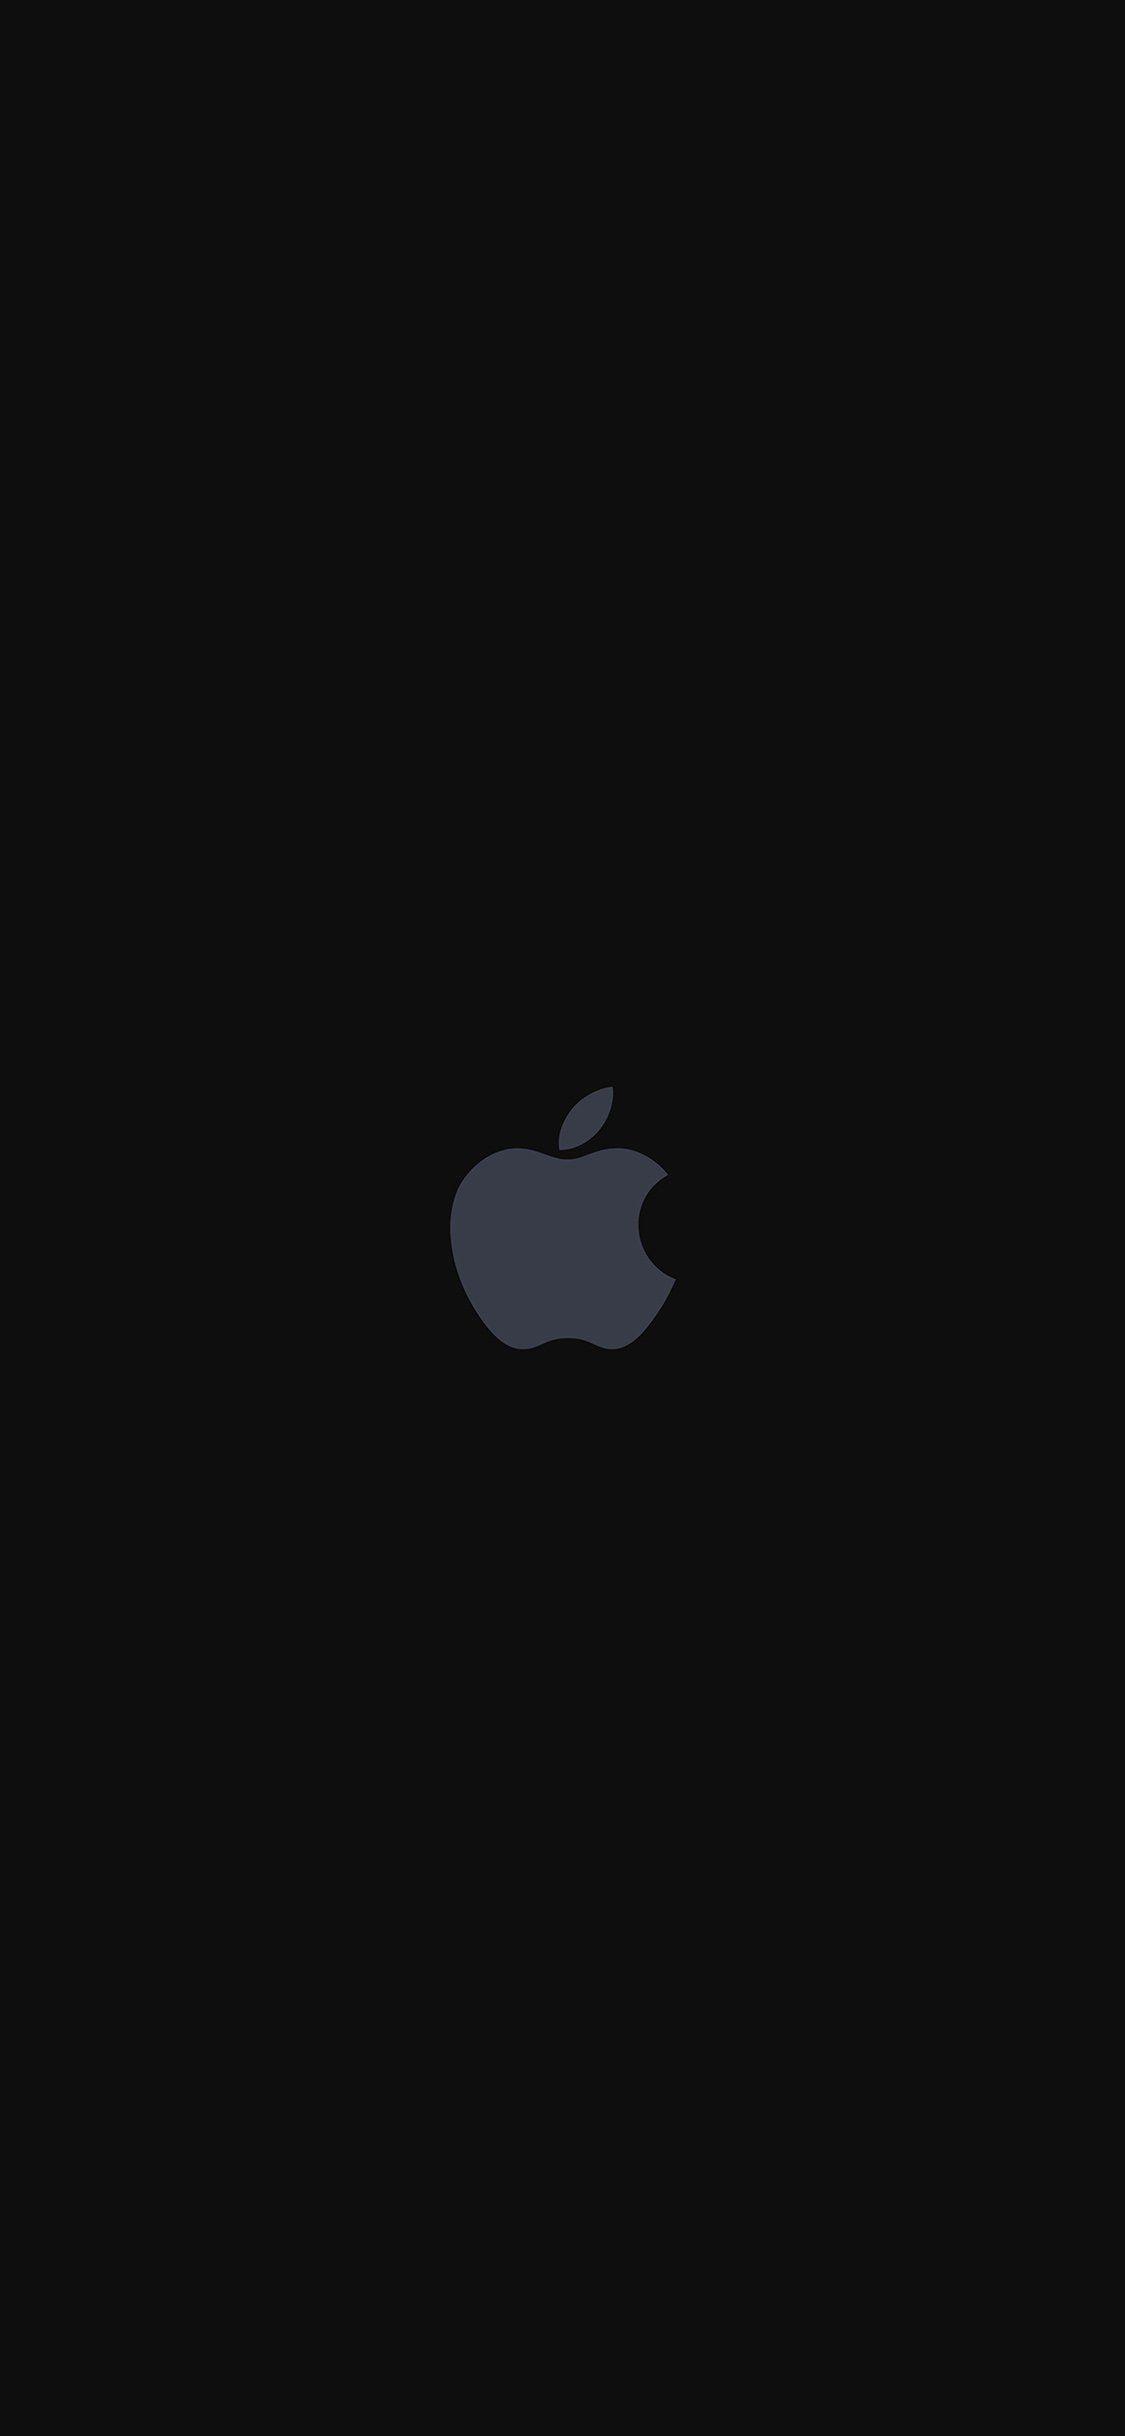 Apple Logo iPhone Wallpaper Free Apple Logo iPhone